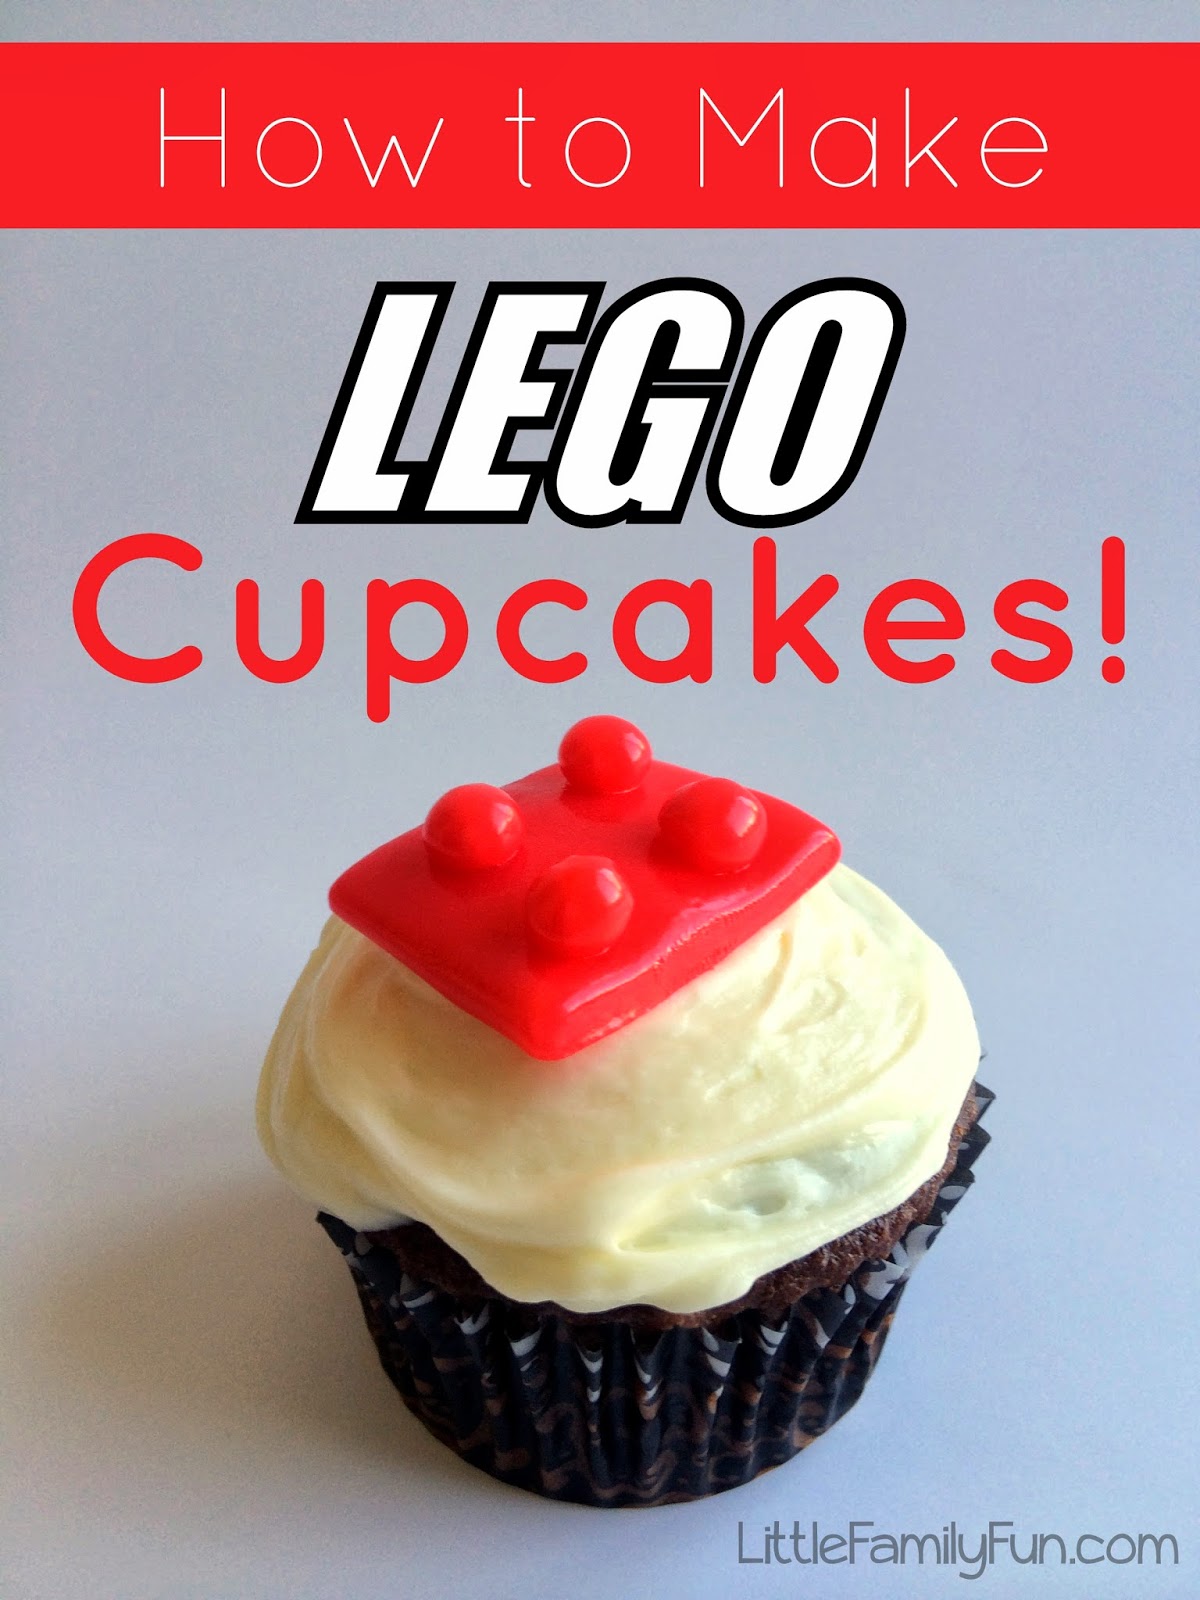 http://www.littlefamilyfun.com/2014/03/how-to-make-lego-cupcakes.html